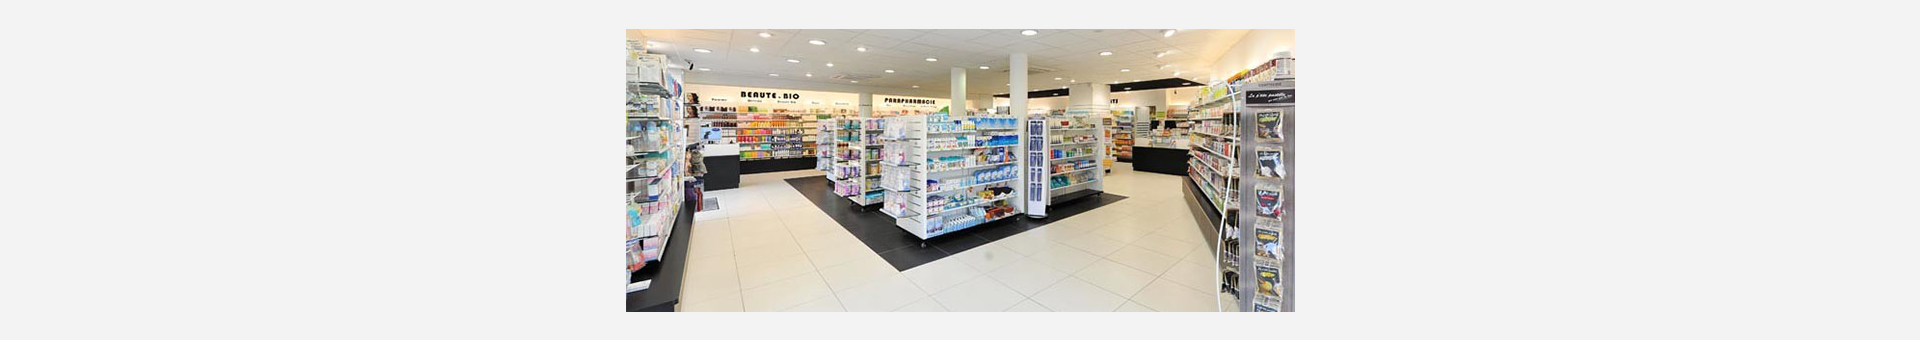 Pharmacie Belhomme Groupe Ma Pharmacie,Saint-Médard-en-Jalles